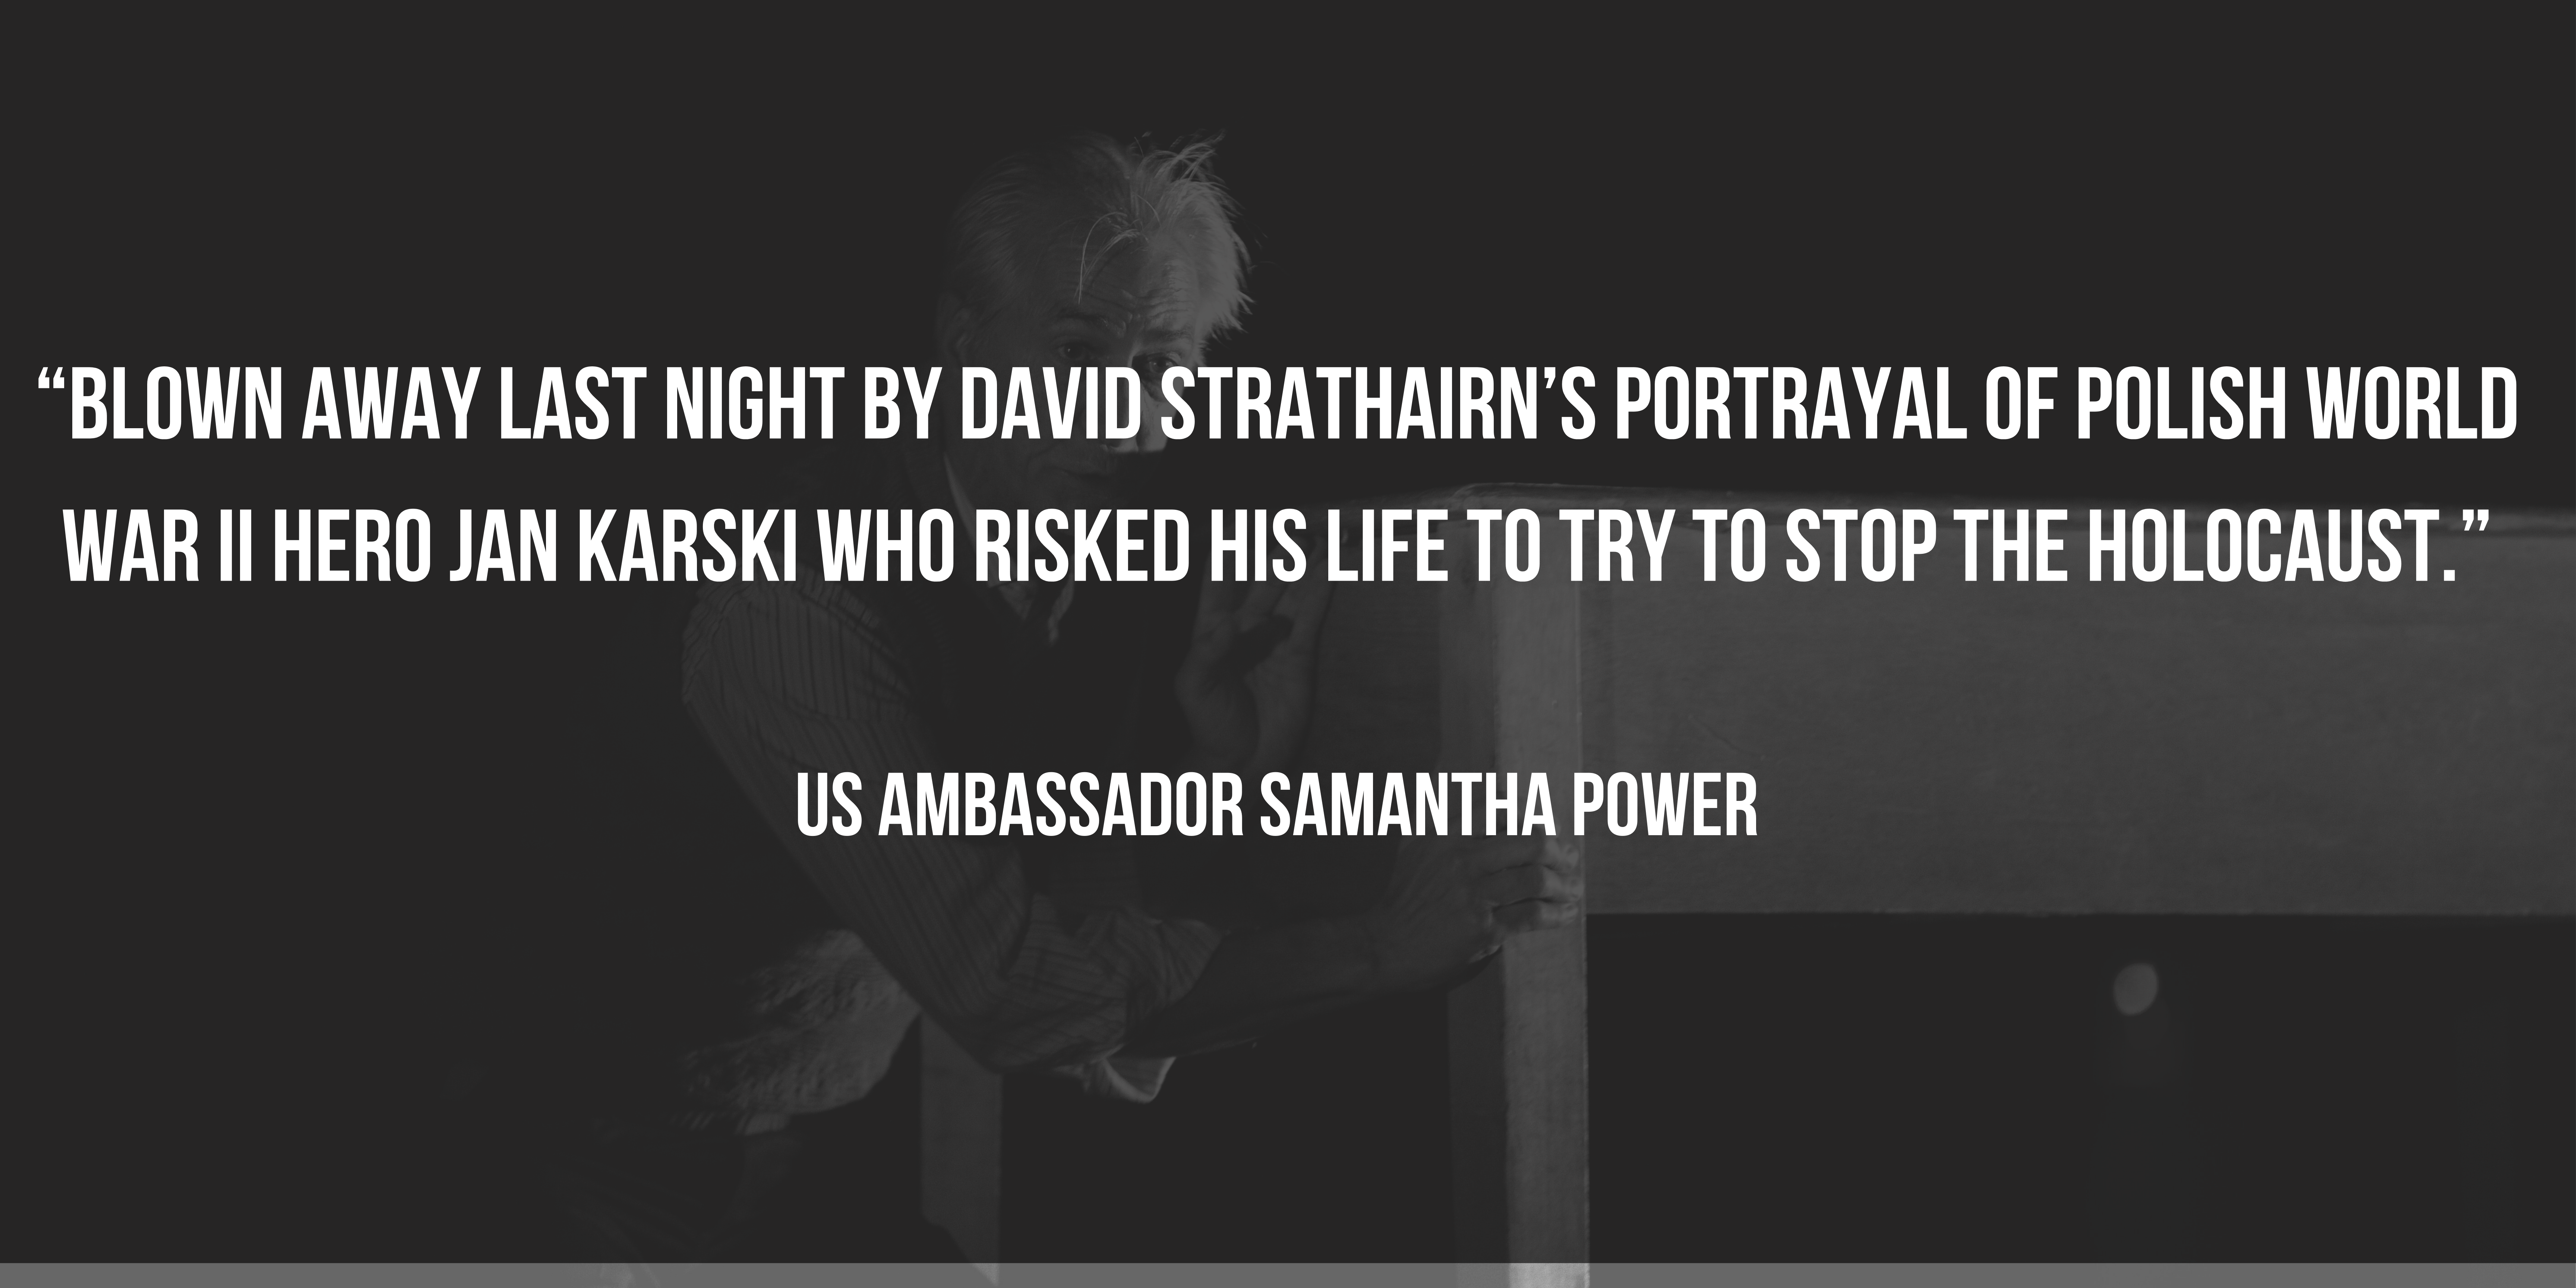 Review from US Ambassador Samantha Power